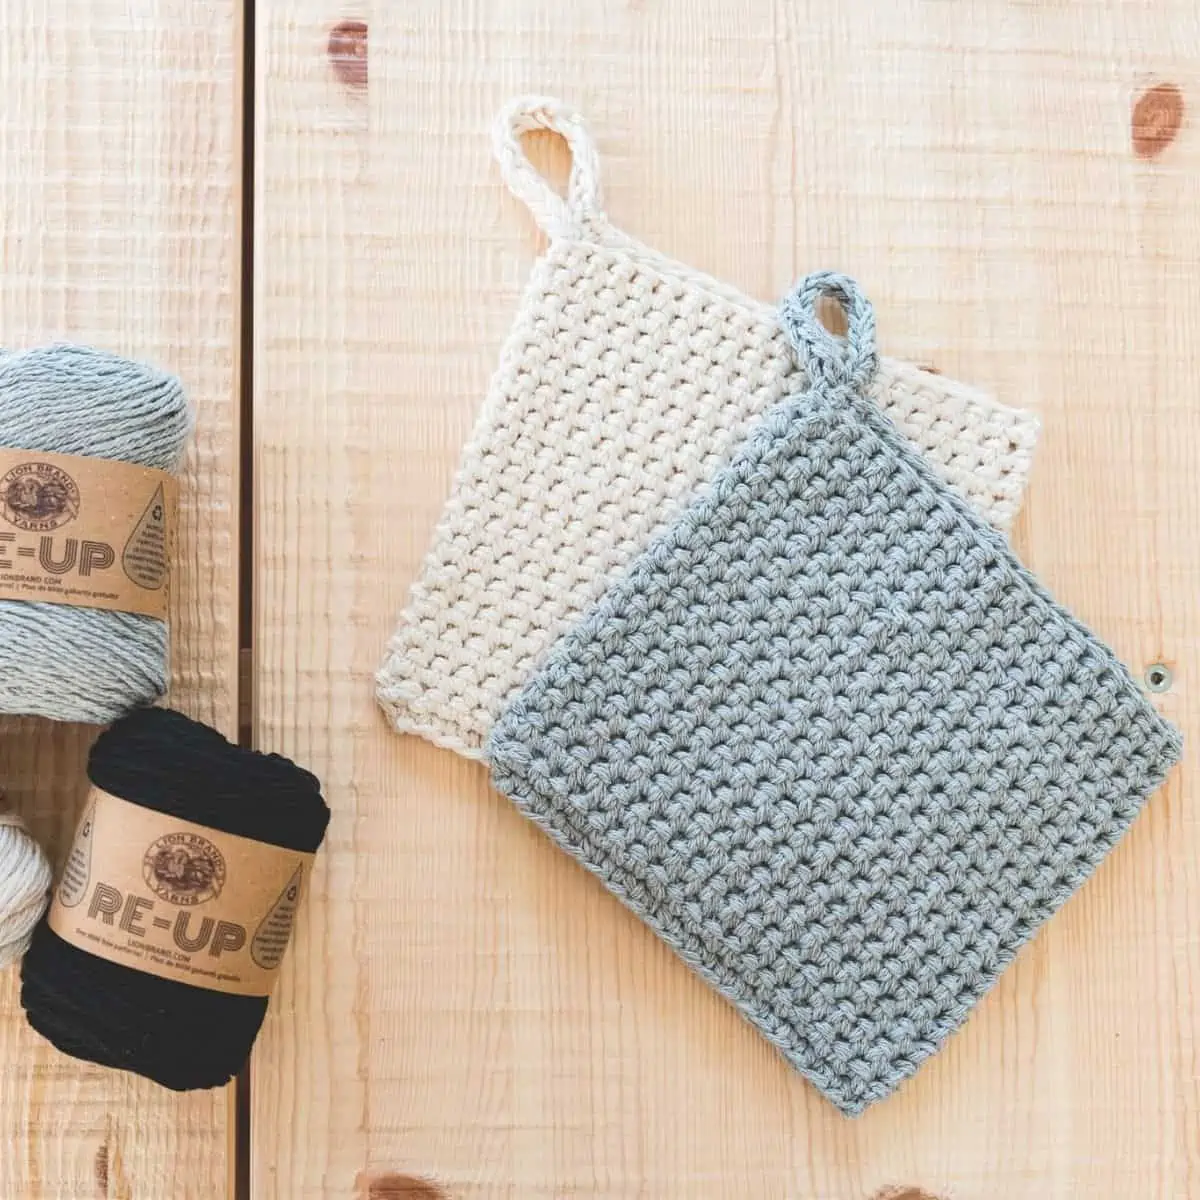 https://www.stitching-together.com/wp-content/uploads/2022/02/Simple-Crochet-potholder.webp